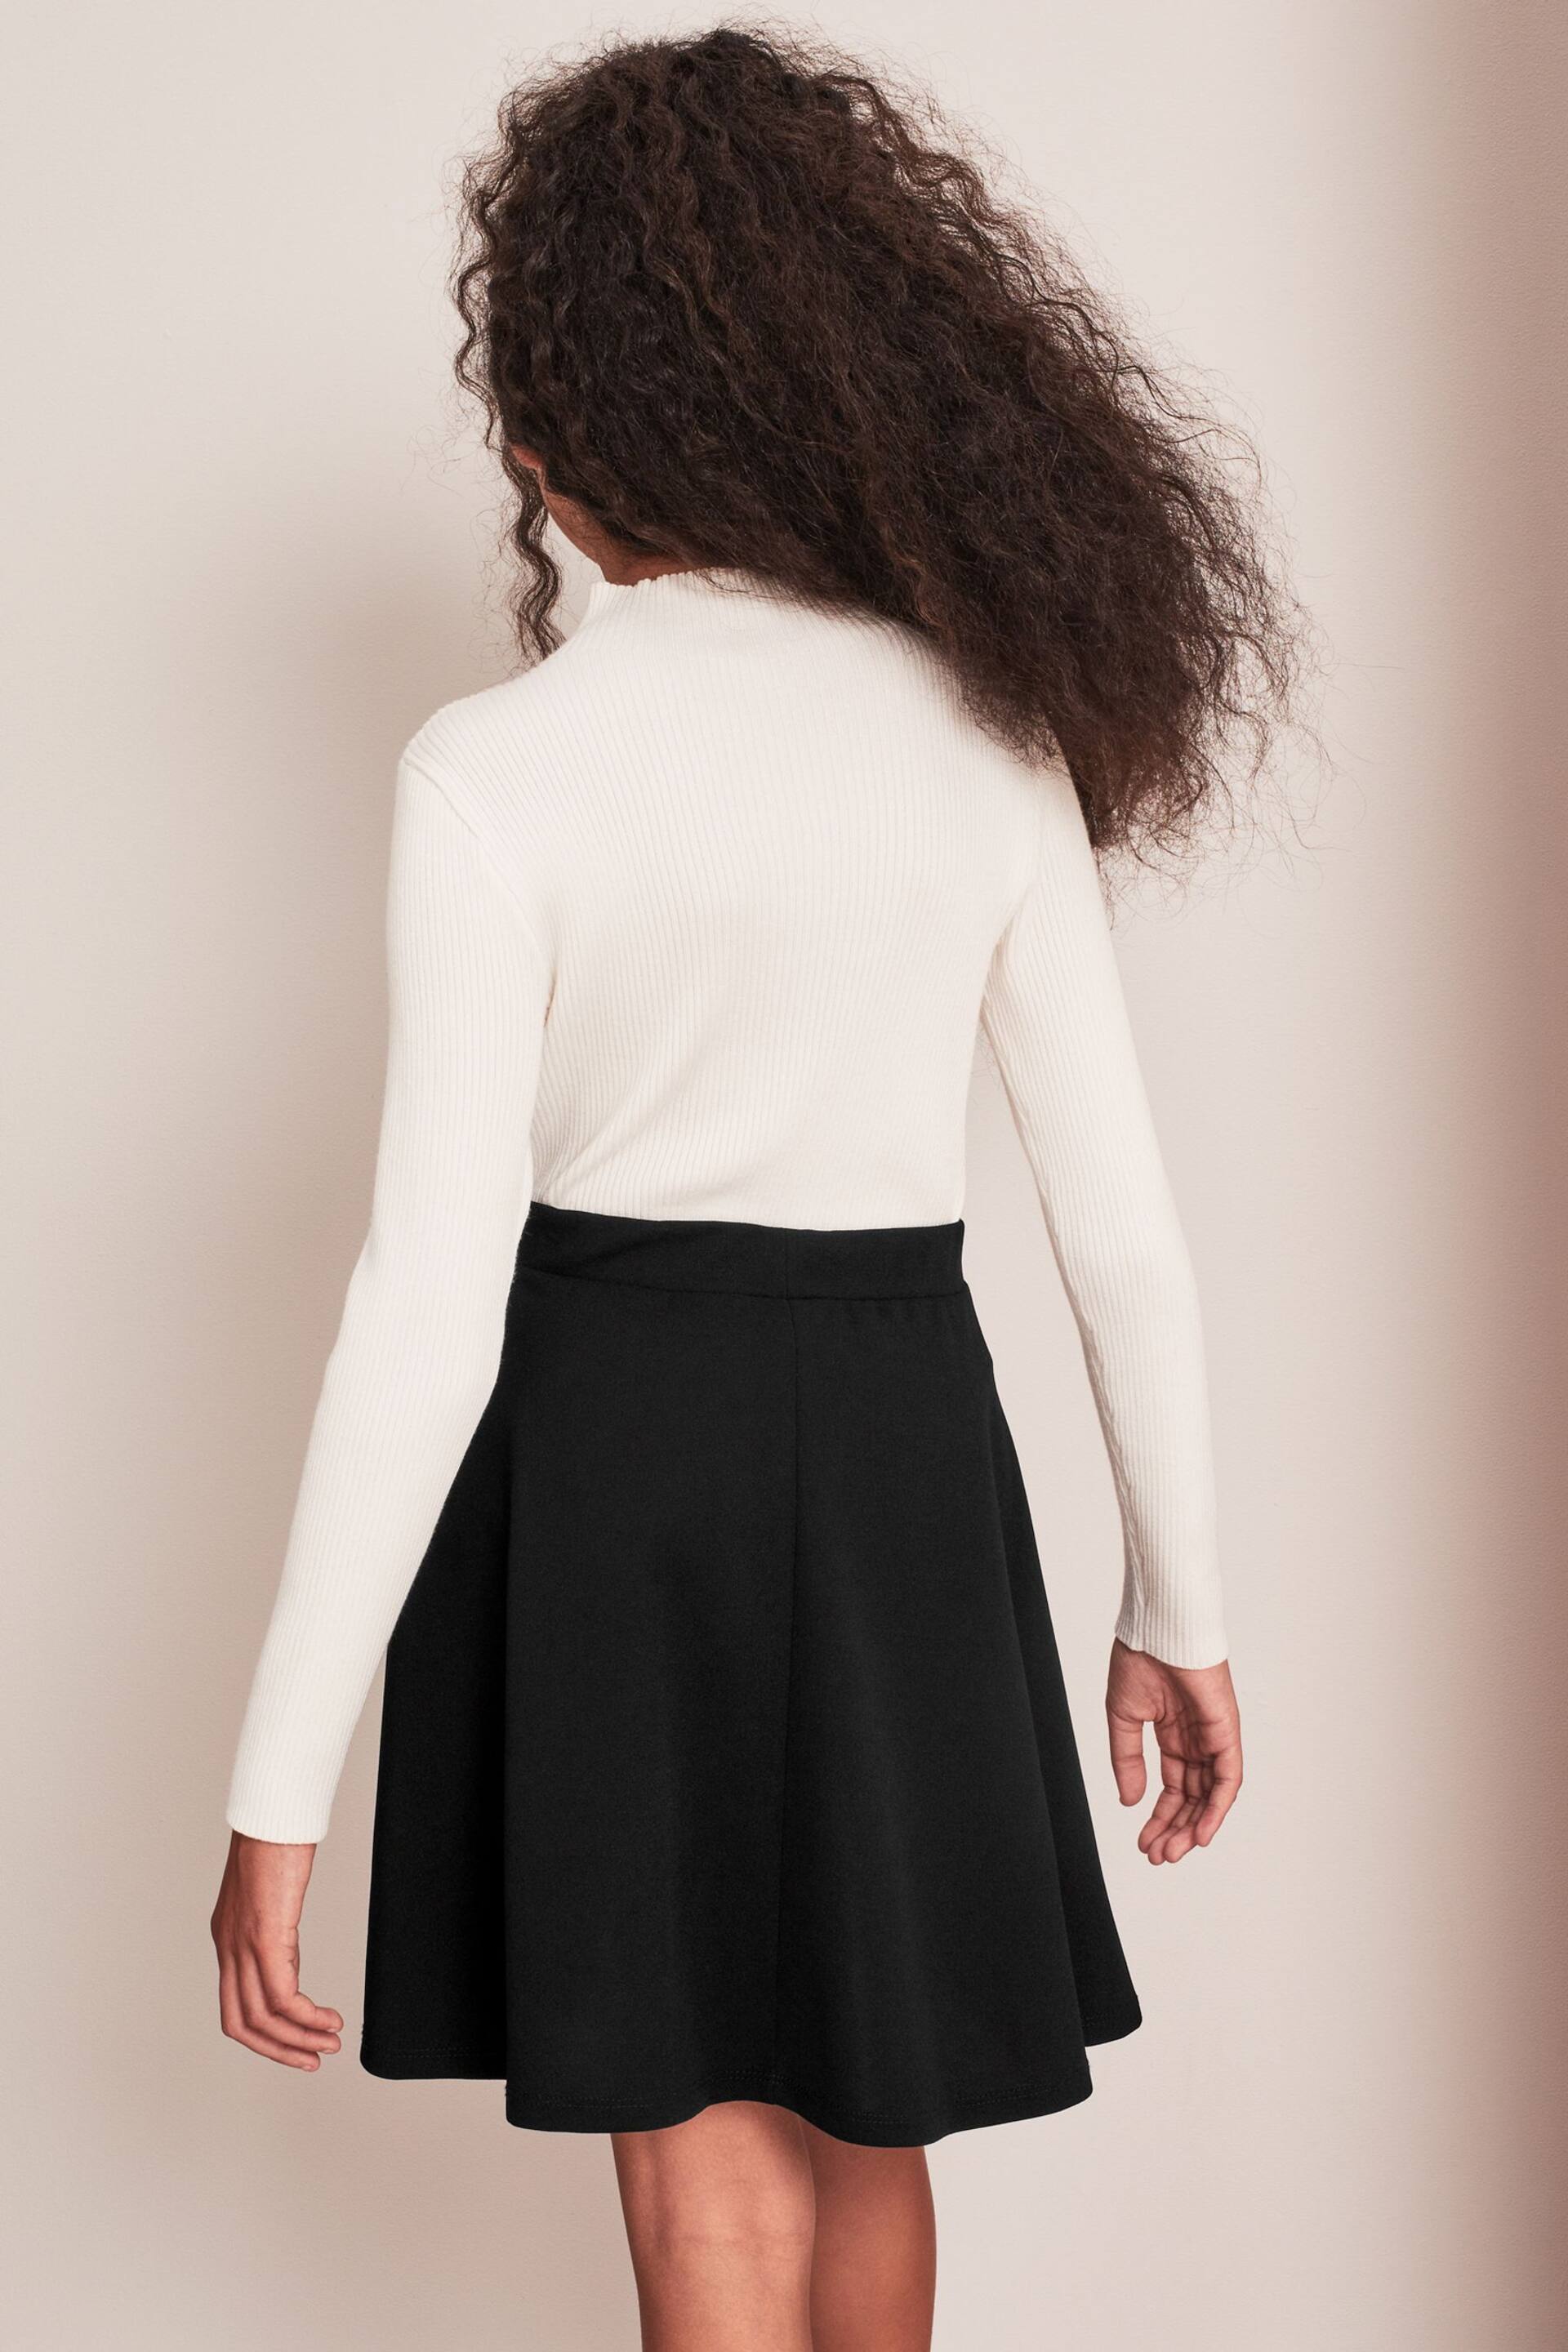 Lipsy Black Studded Skirt - Image 4 of 4